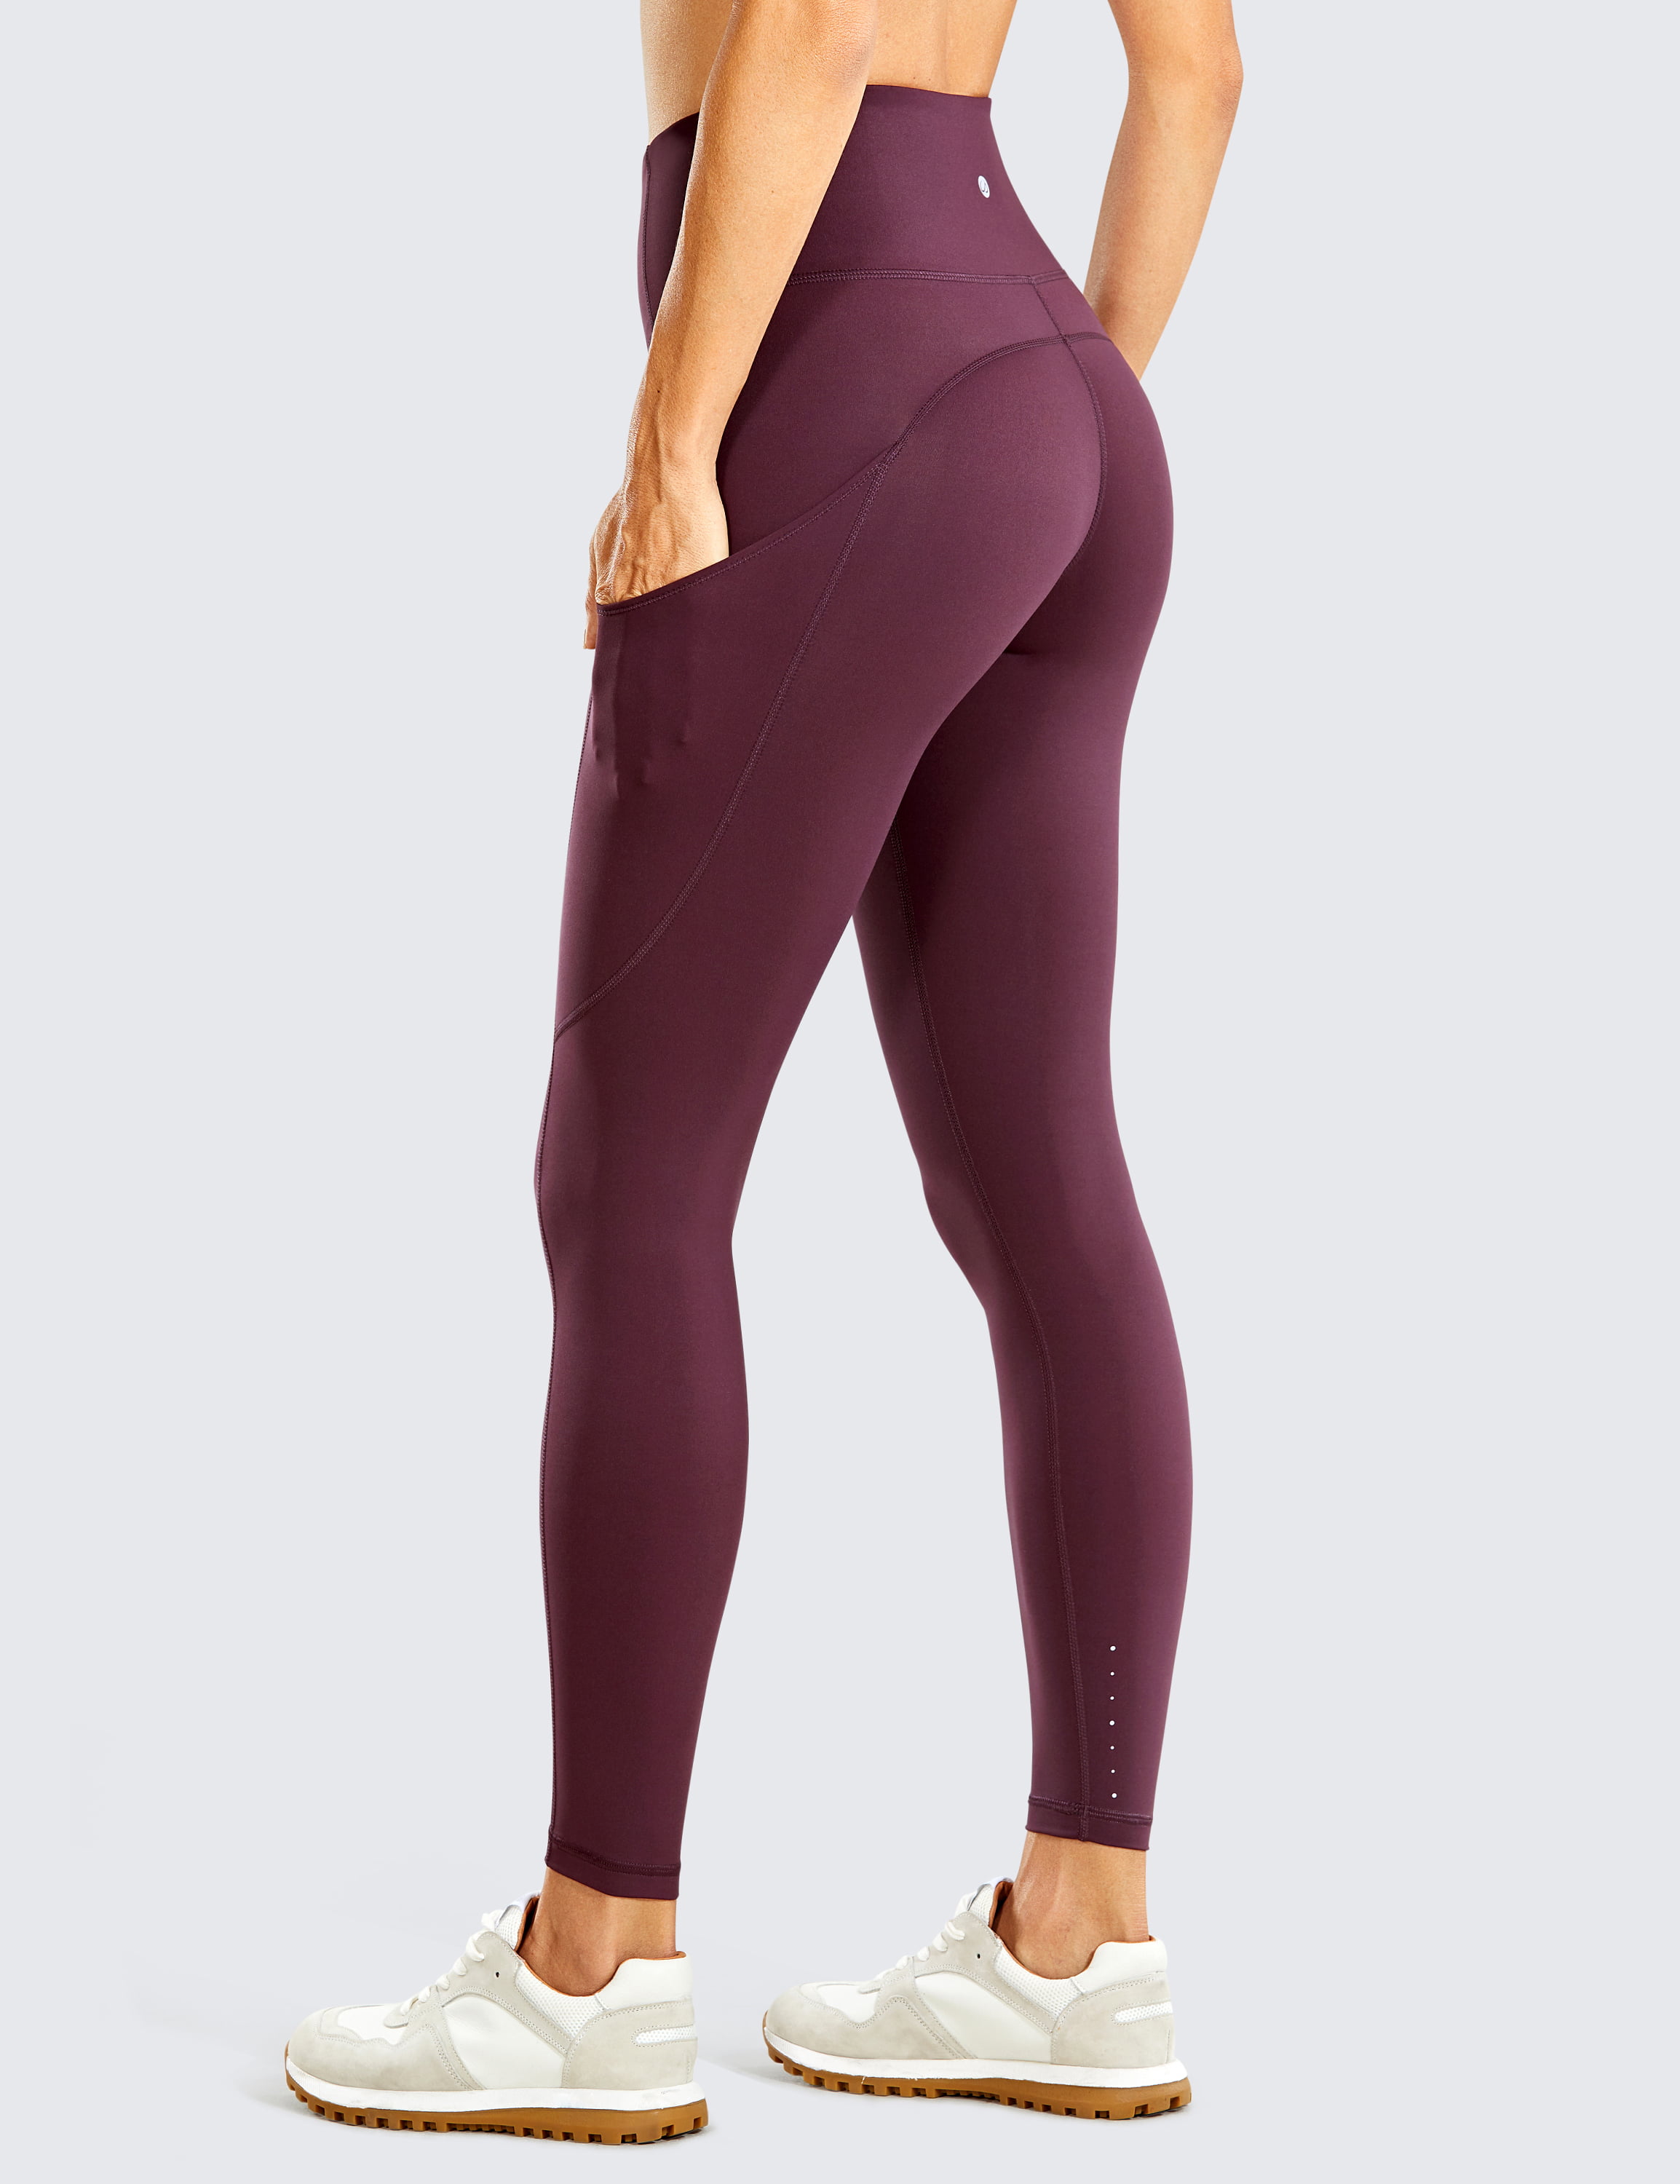 CRZ YOGA Women's Naked Feeling Workout Leggings 25 Inches - 7/8 High Waist Yoga  Tight Pants Melanite 40 price in UAE,  UAE